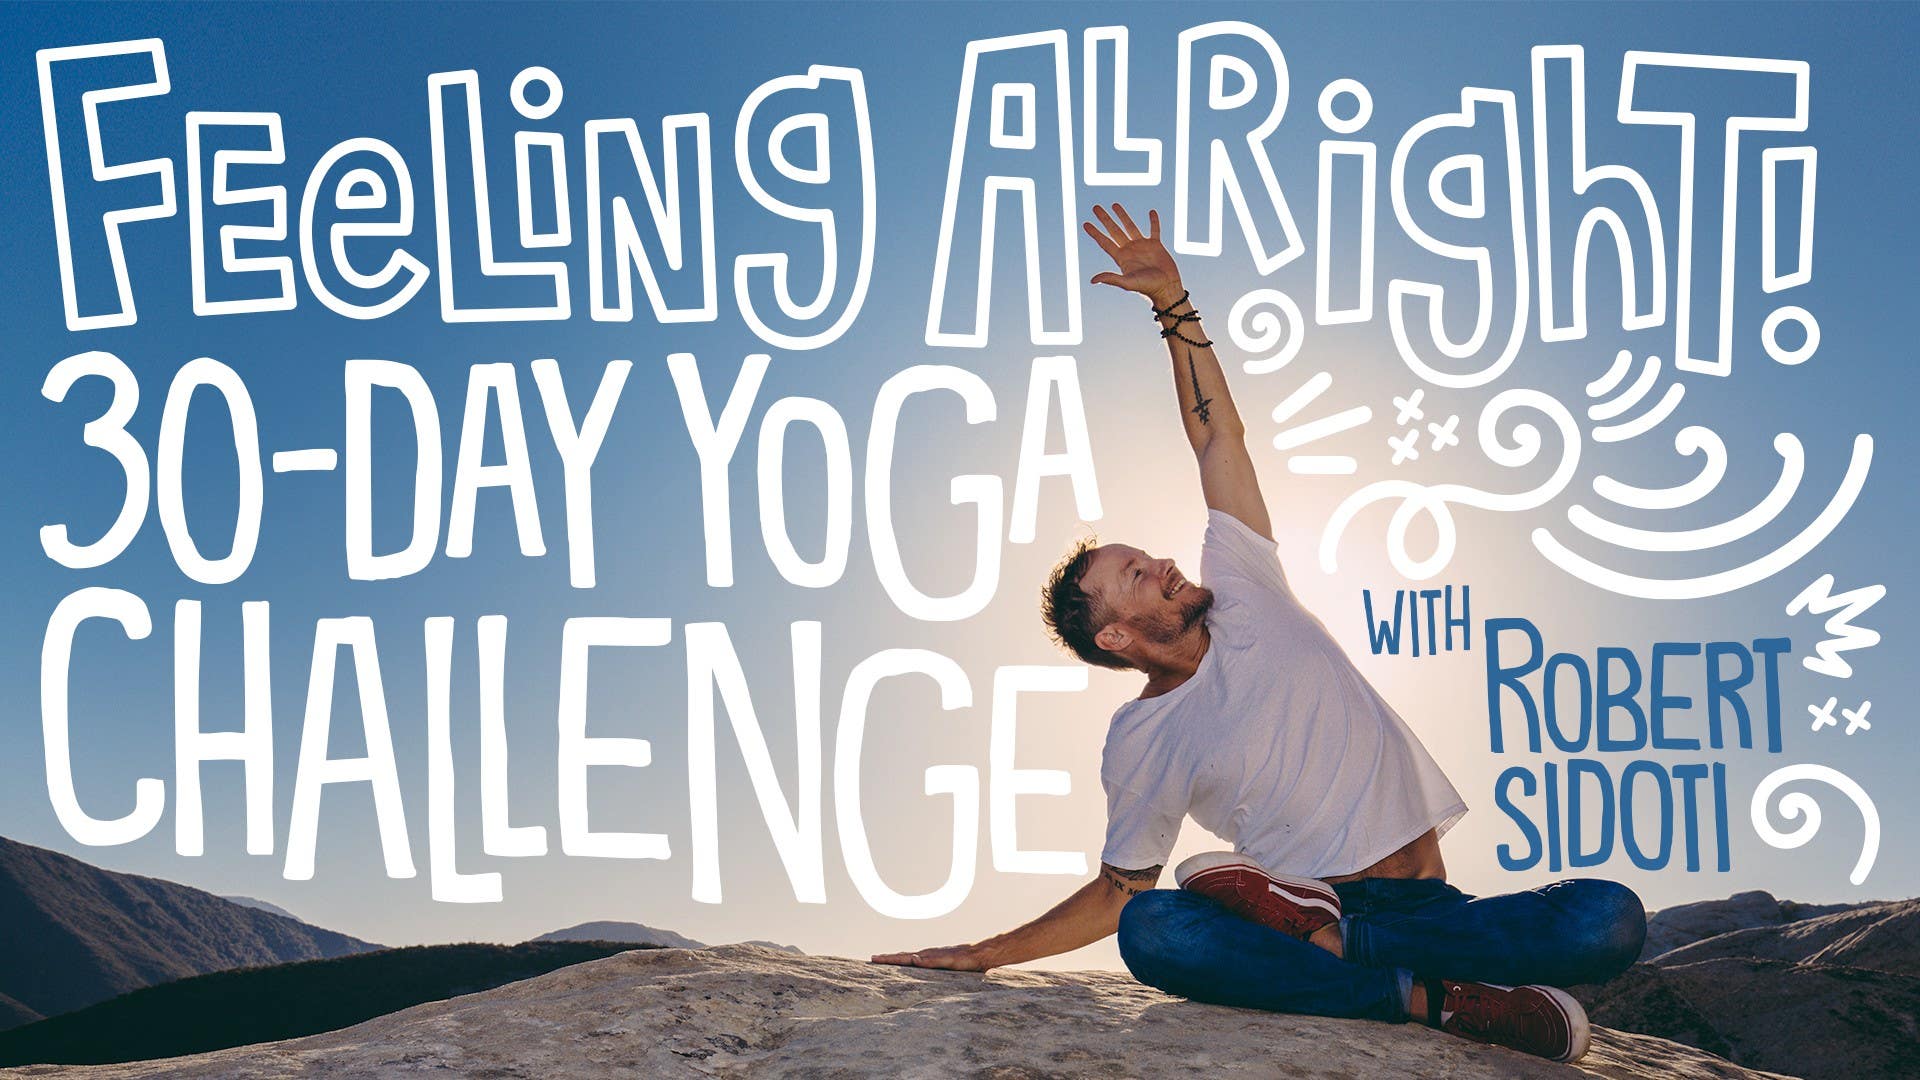 Feeling Alright: 30-Day Yoga Challenge Artwork